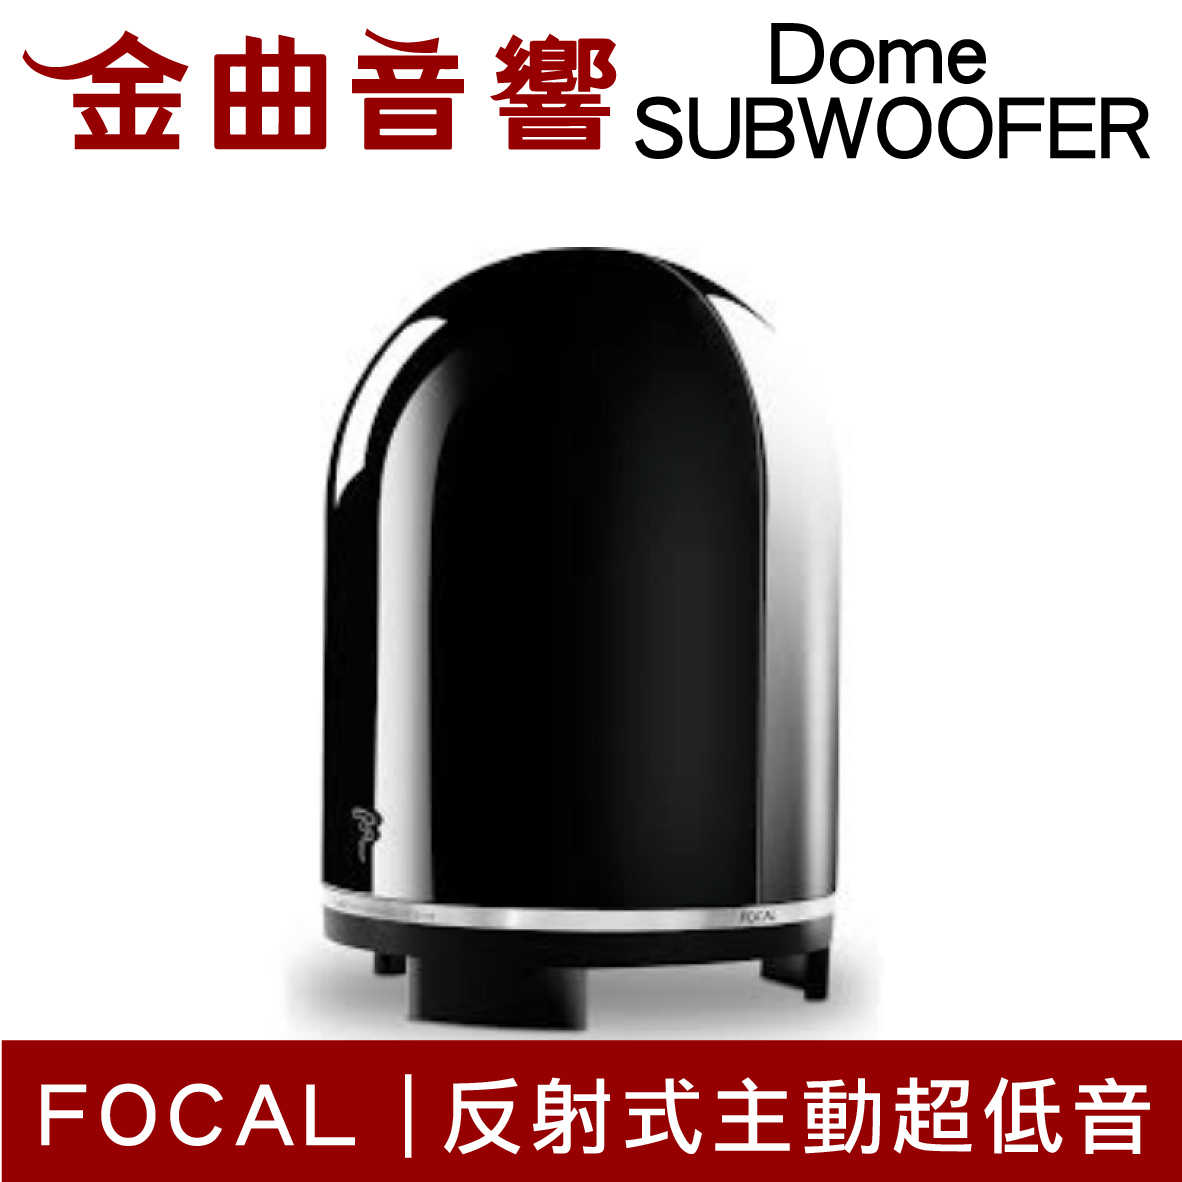 FOCAL Dome Subwoofer 黑色 時尚 鏡面 重低音 喇叭 音響（單機）| 金曲音響